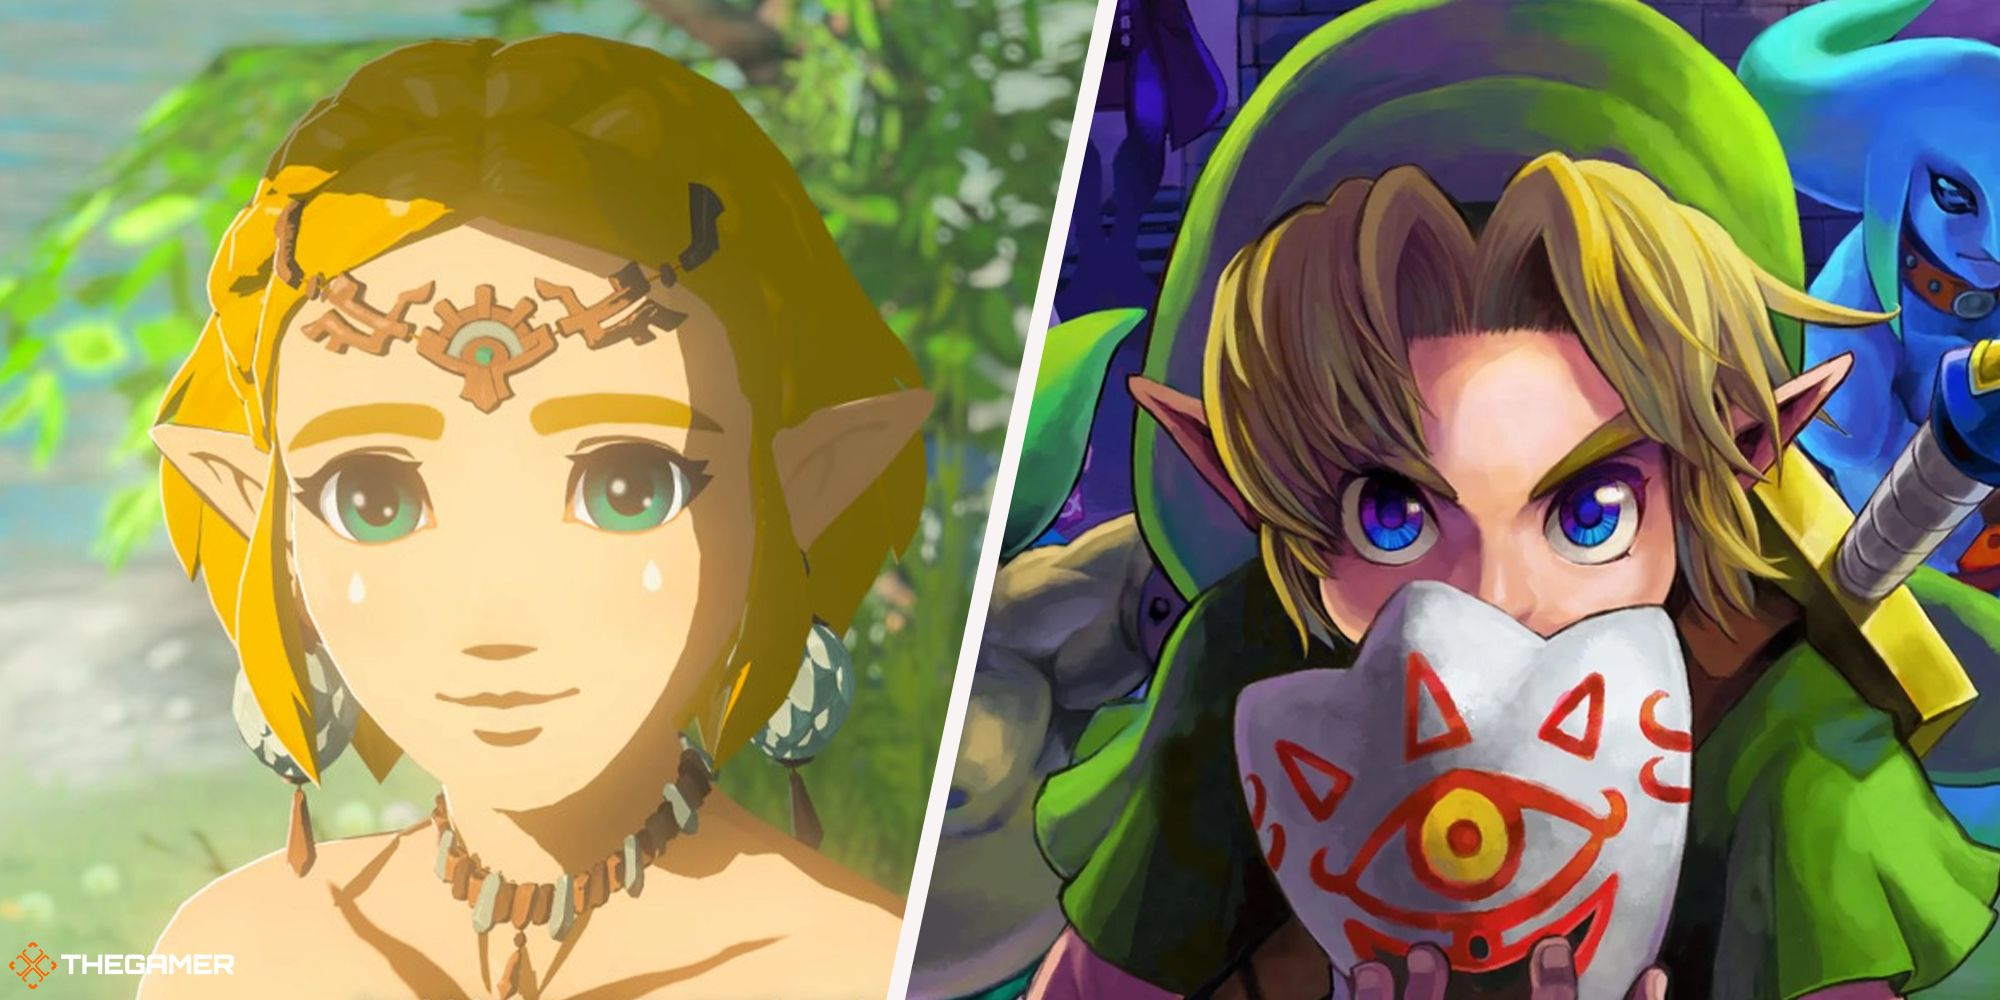 The Legend of Zelda - Zelda from Tears of the Kingdom on left, Link from Majora's Mask on right